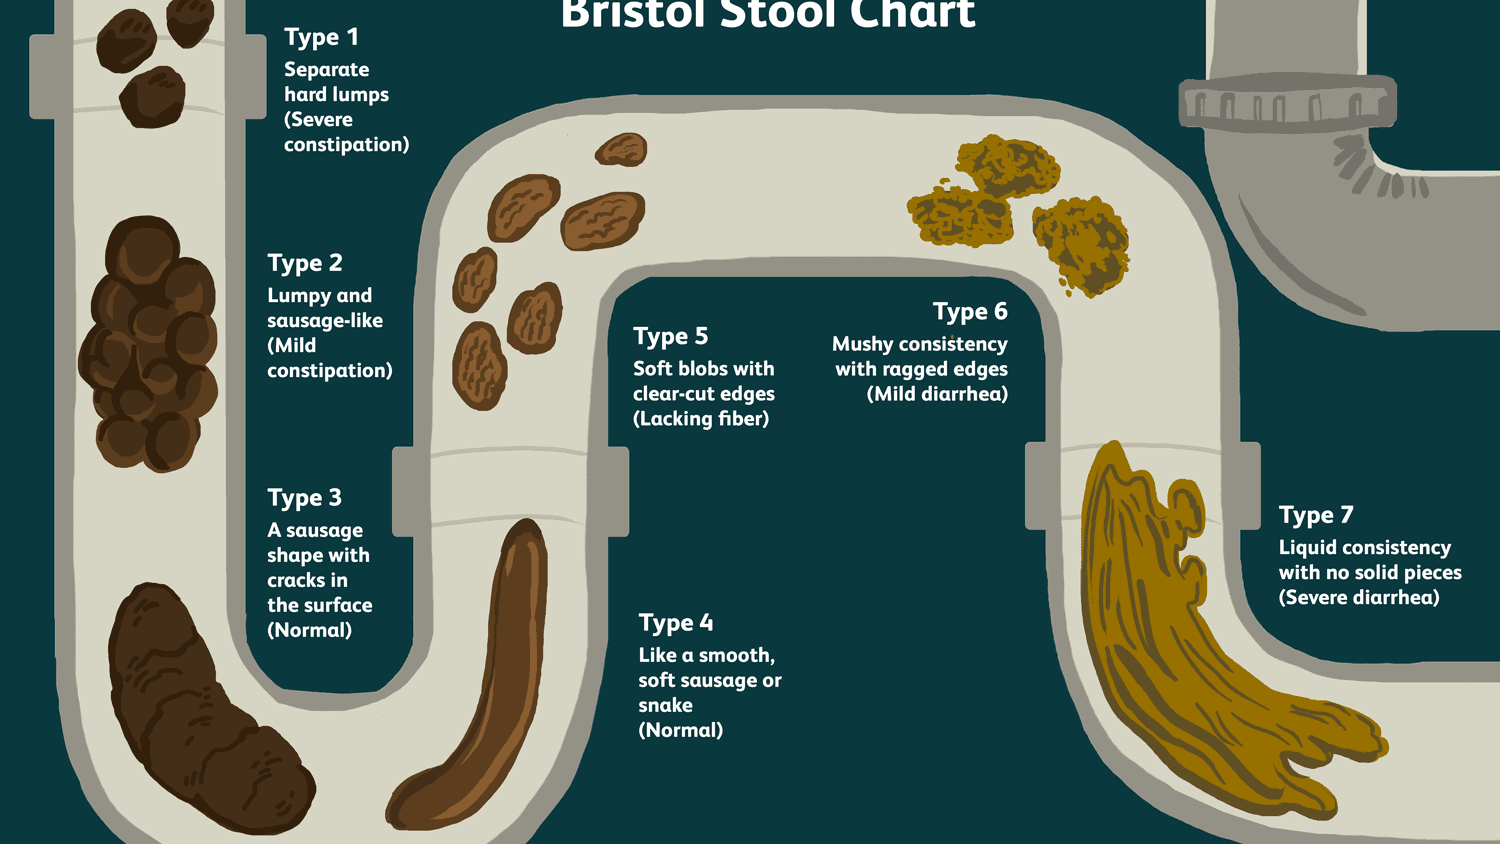 bristol-stool-chart-4174964-v3-5bda0c2cc9e77c0051ed7541.png